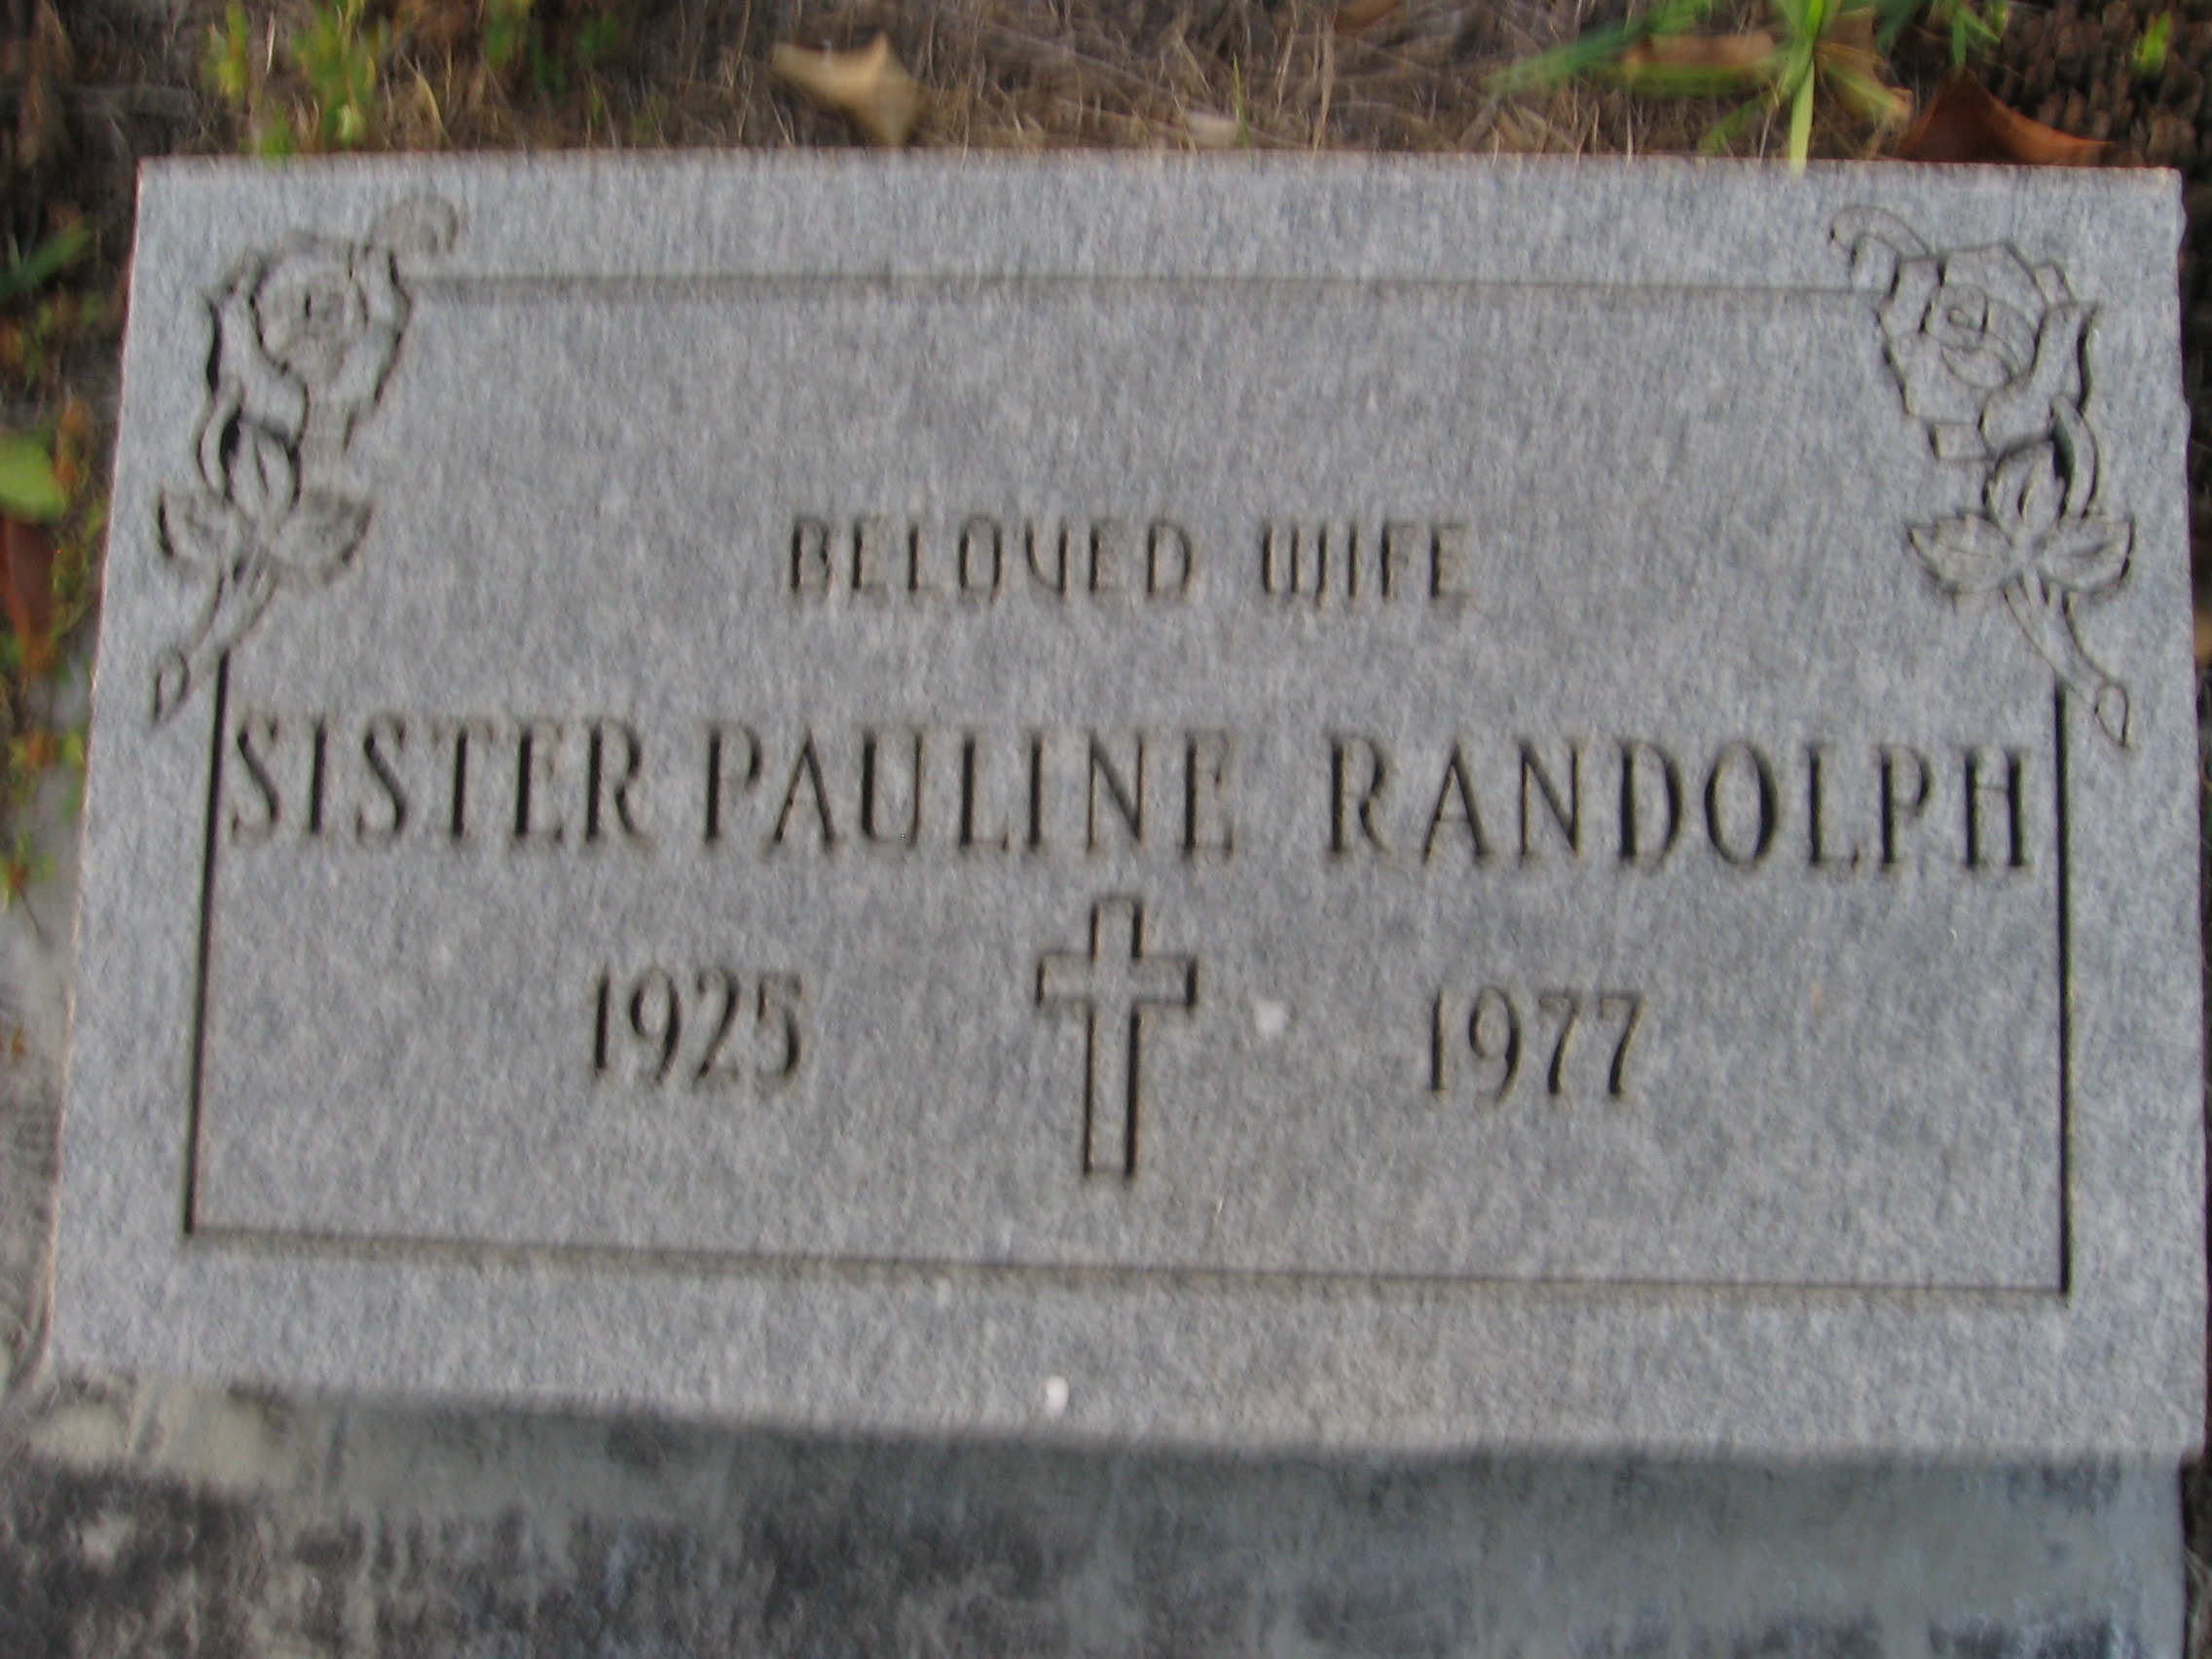 Sister Pauline Randolph